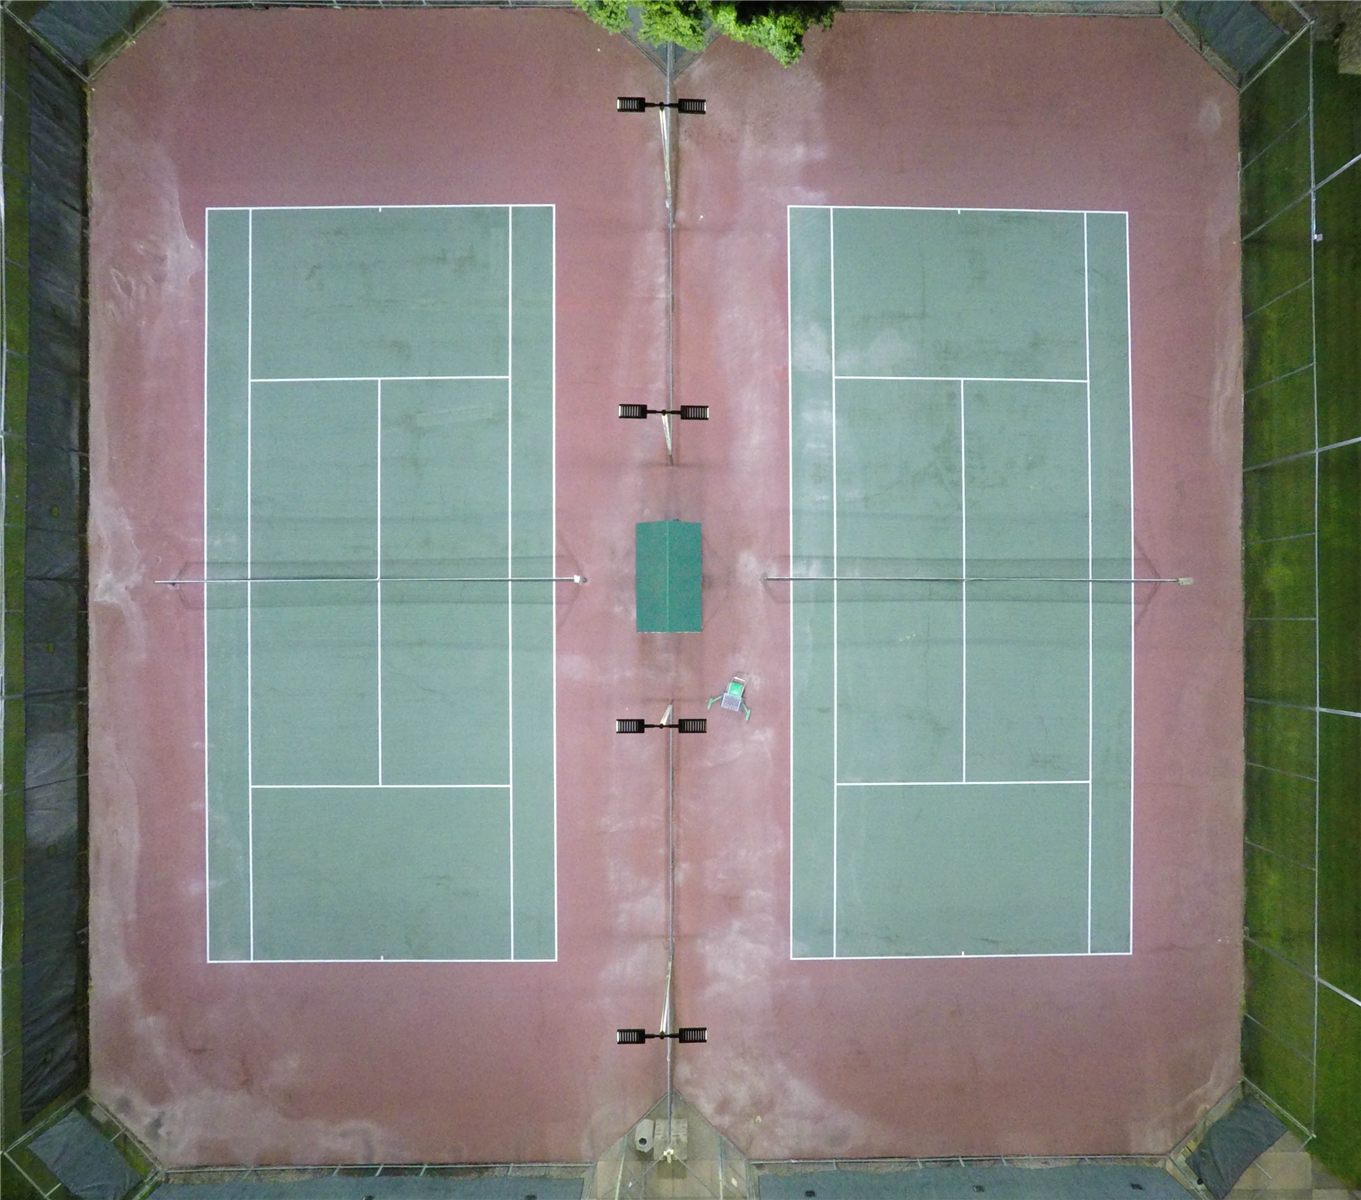 Tennis Courts, USA